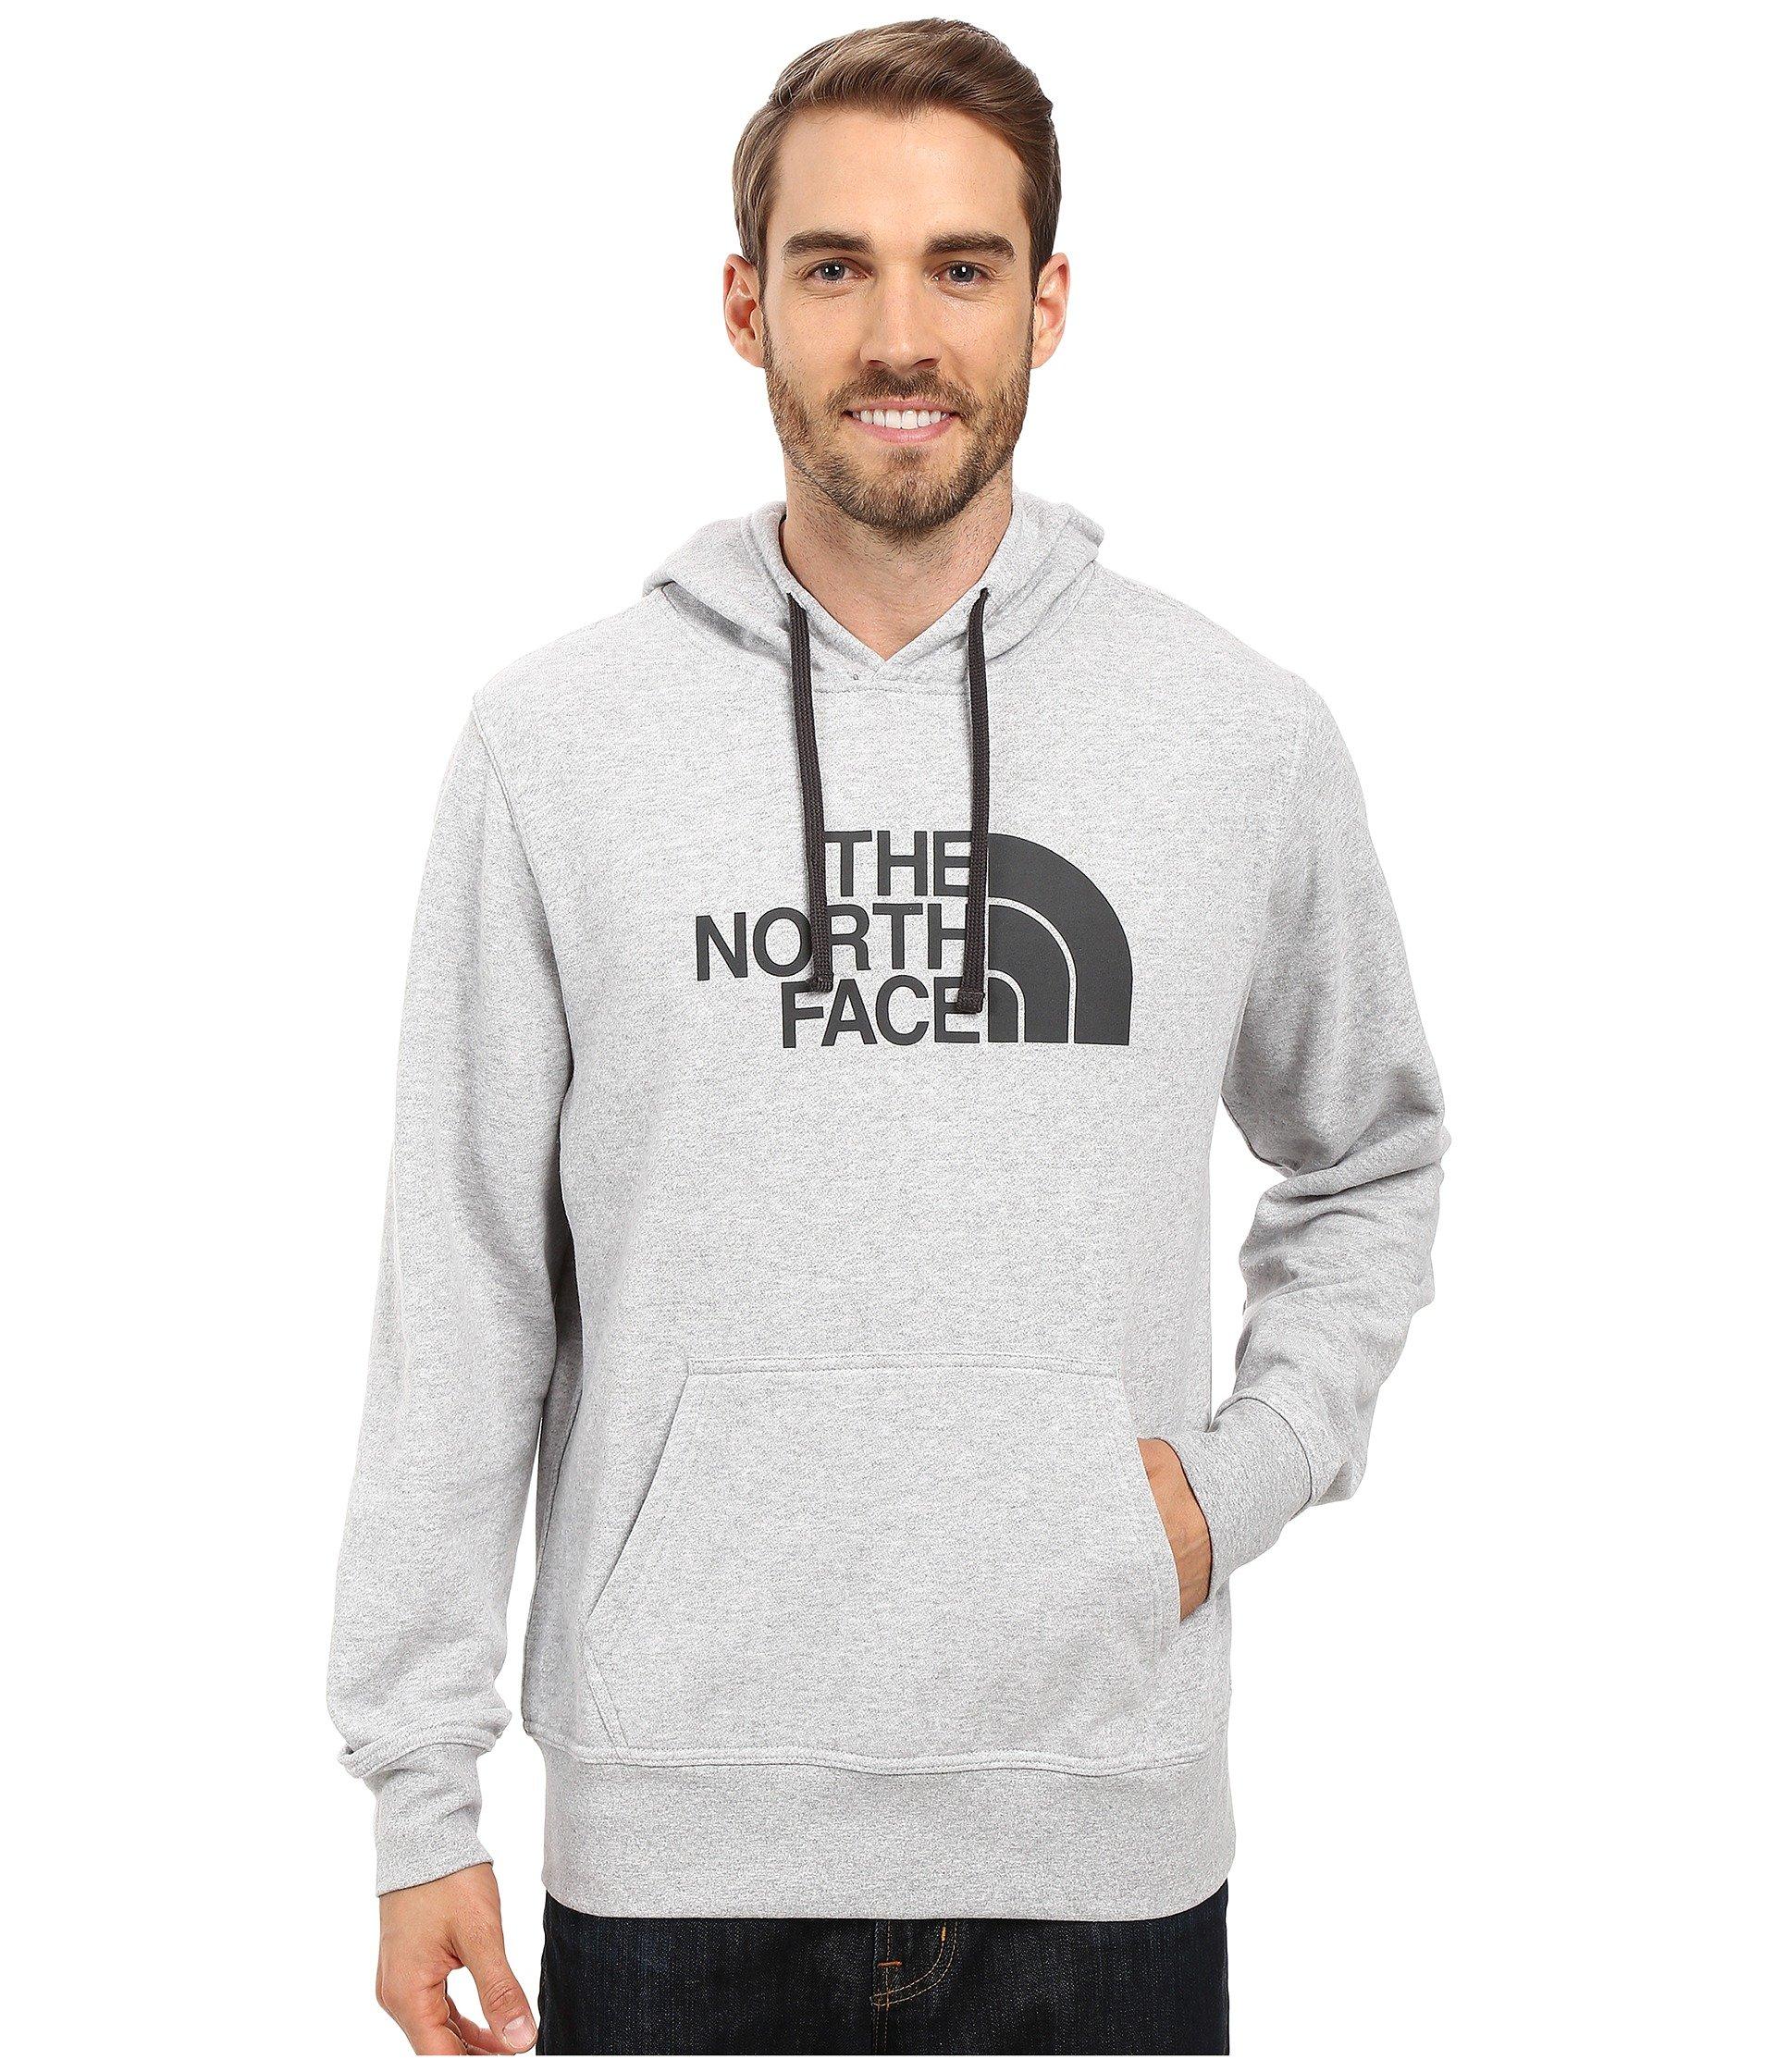 The North Face Half Dome Hoodie In Tnf Light Grey Heather Asphalt Grey Prior Season Modesens